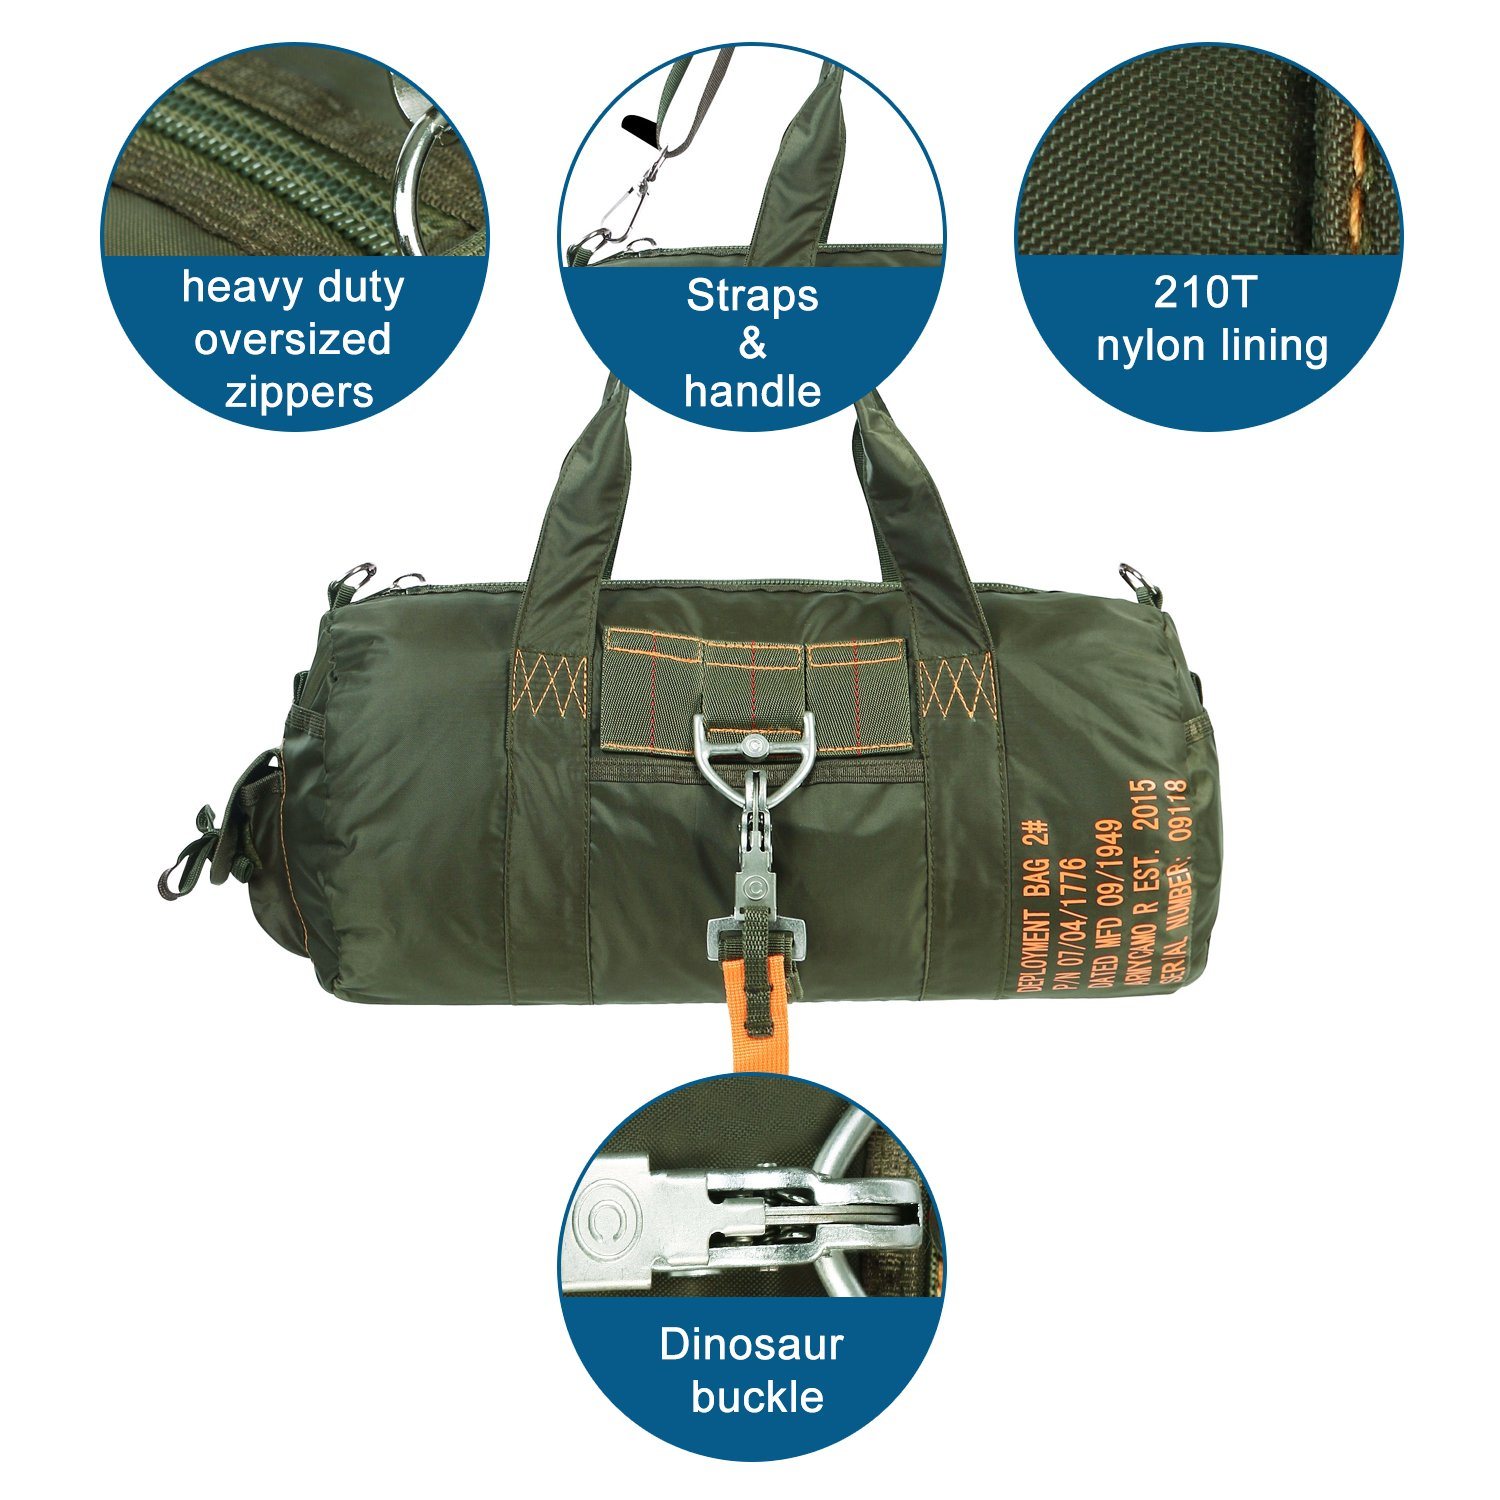 Air Force Military Duffle Bag Duty Nylon Tactical Duffel